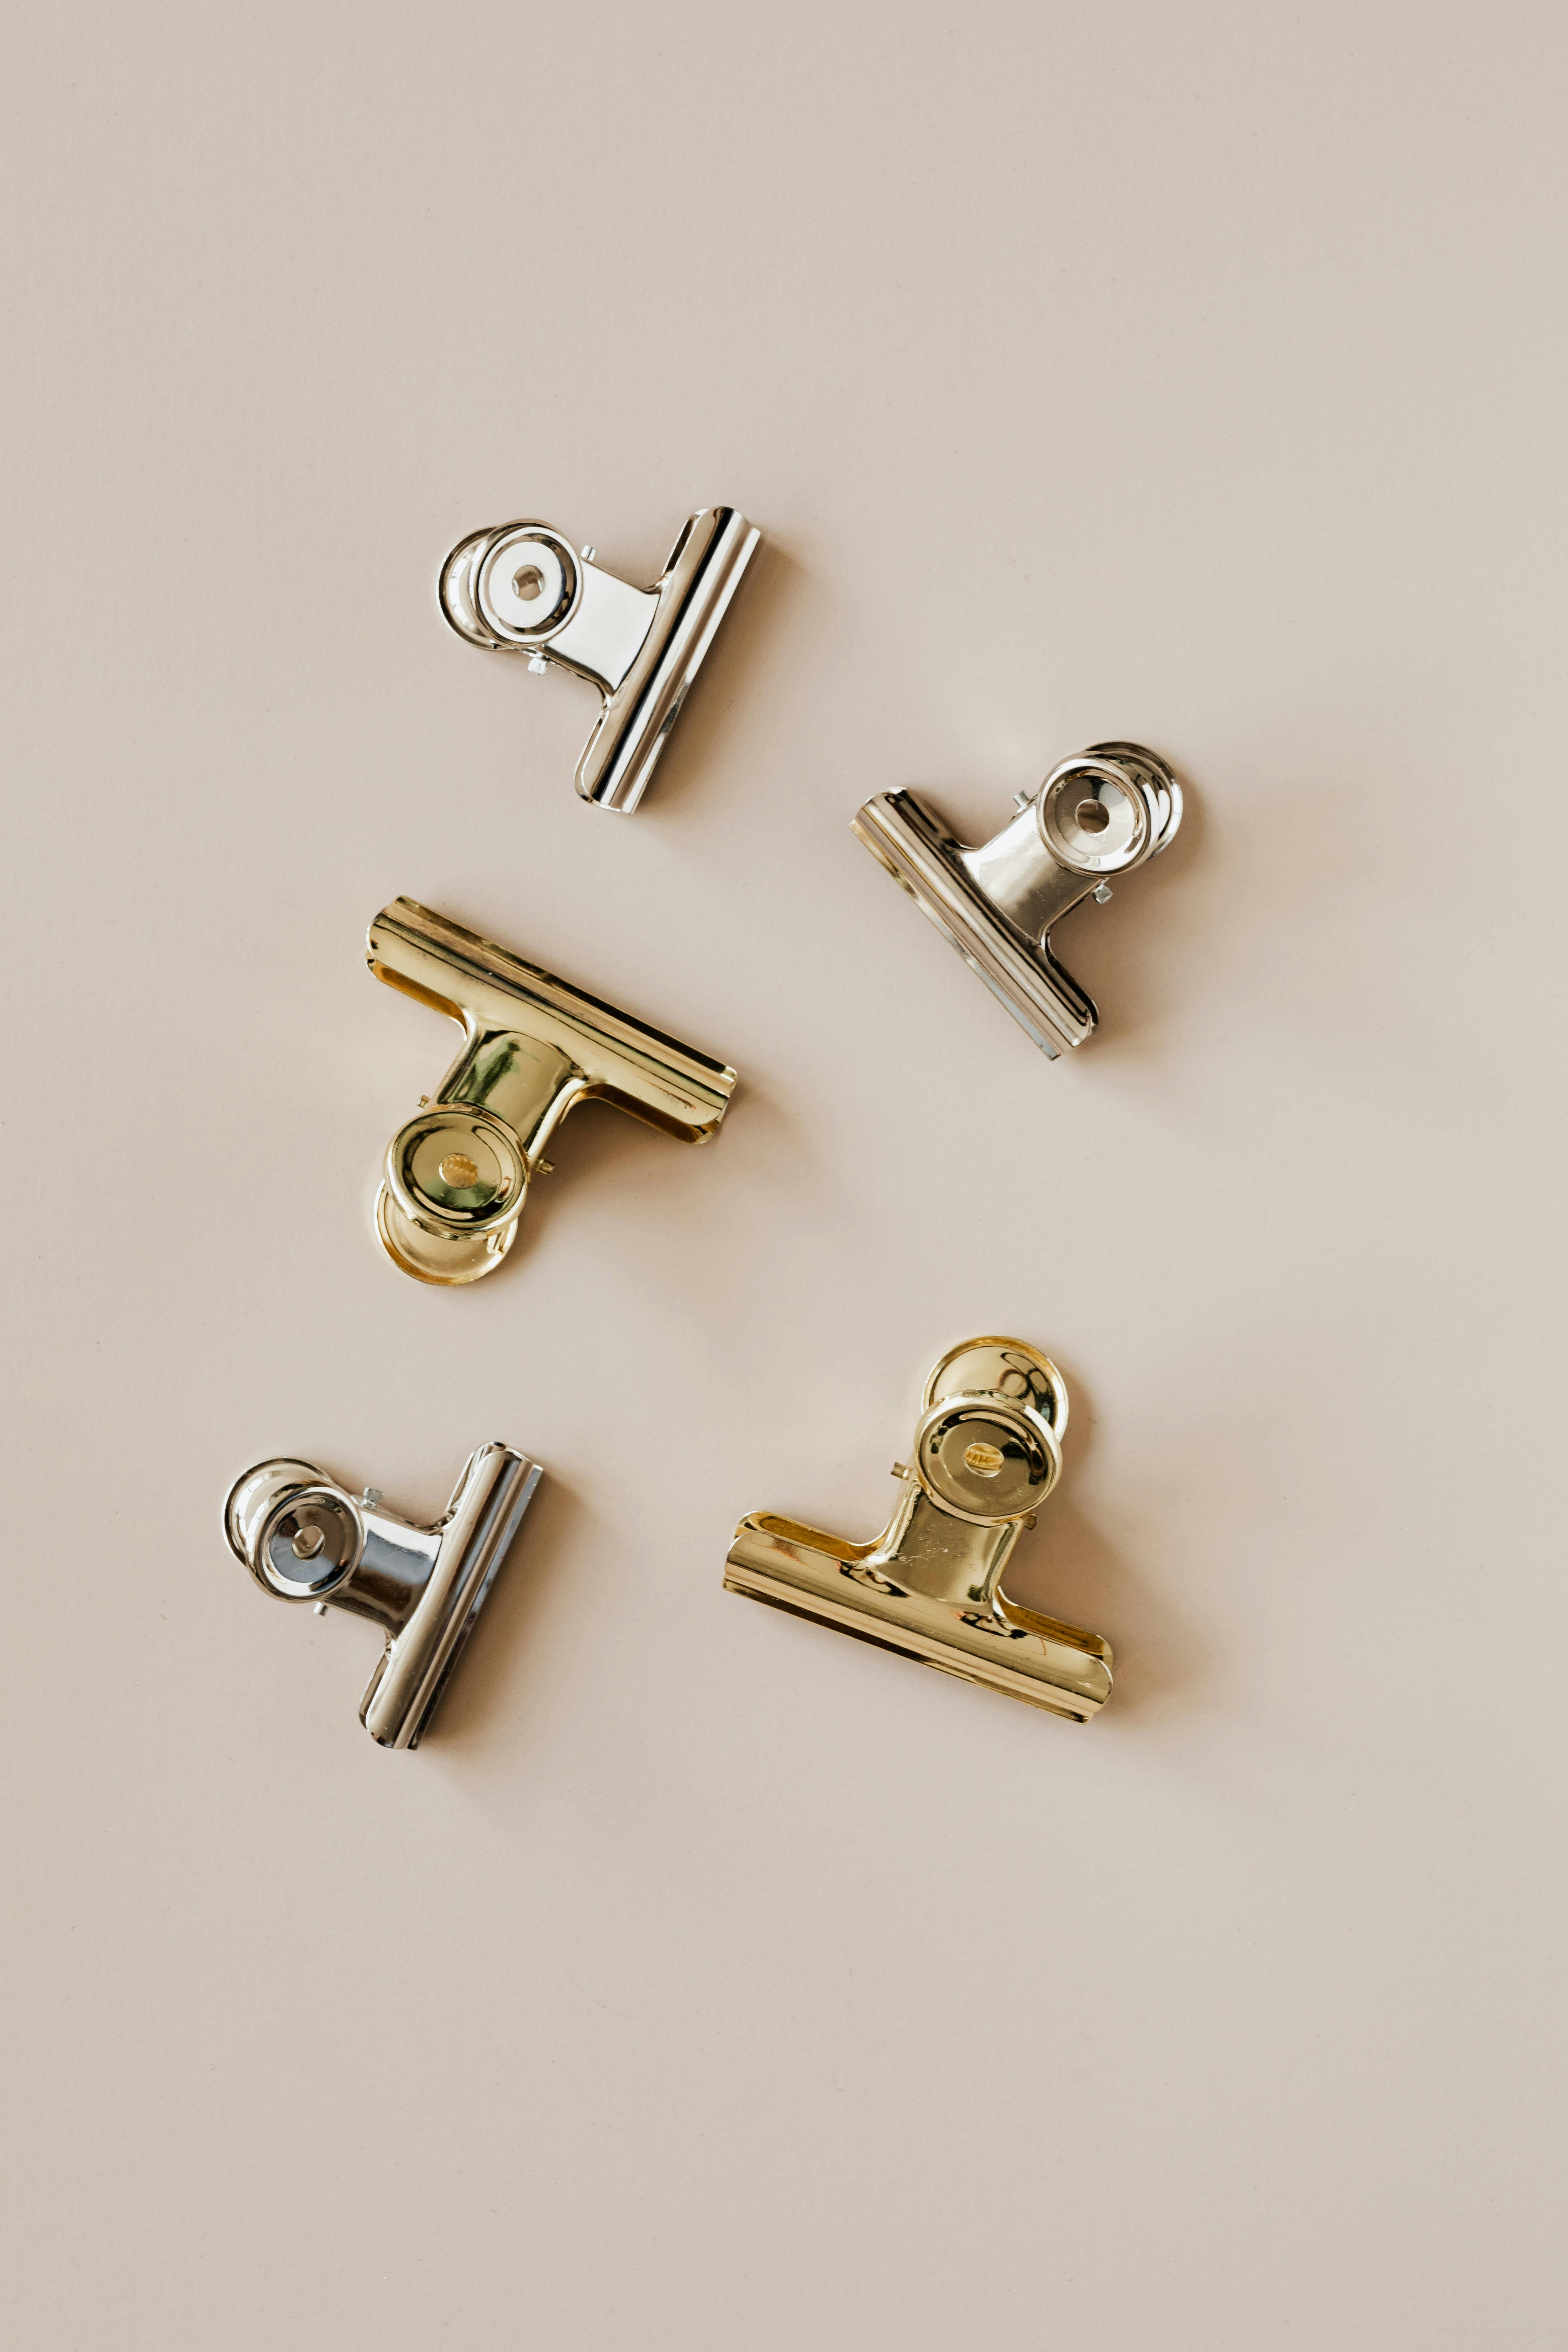 Kit of various metallic clips on beige surface · Free Stock Photo